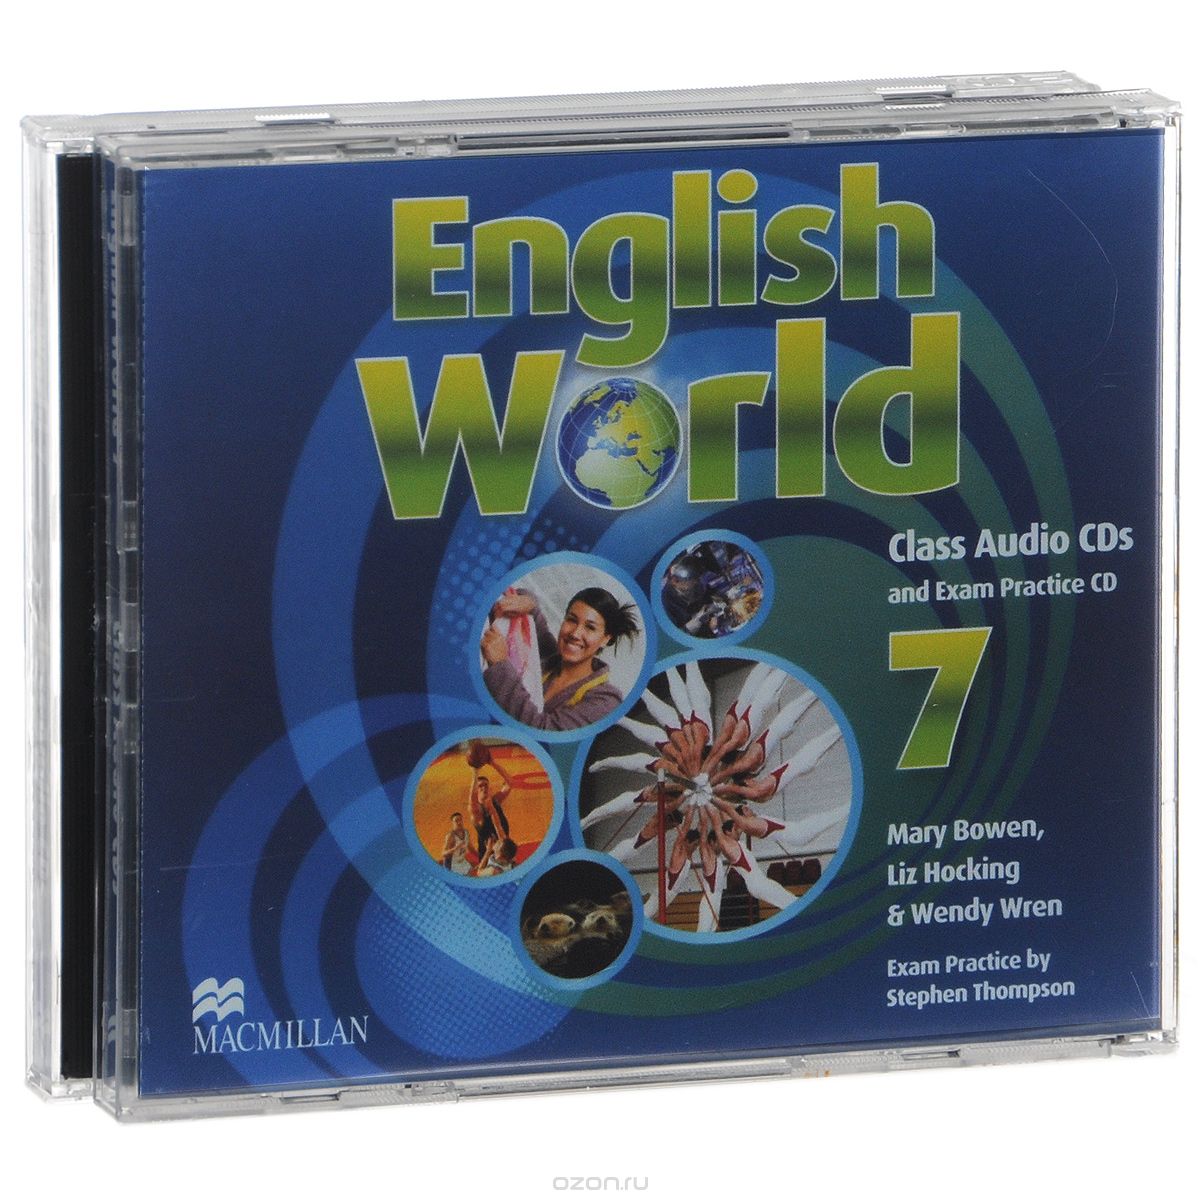 Скачать книгу "English World 7: Class CDs and Exam Practise CD (аудиокурс на 3 CD)"